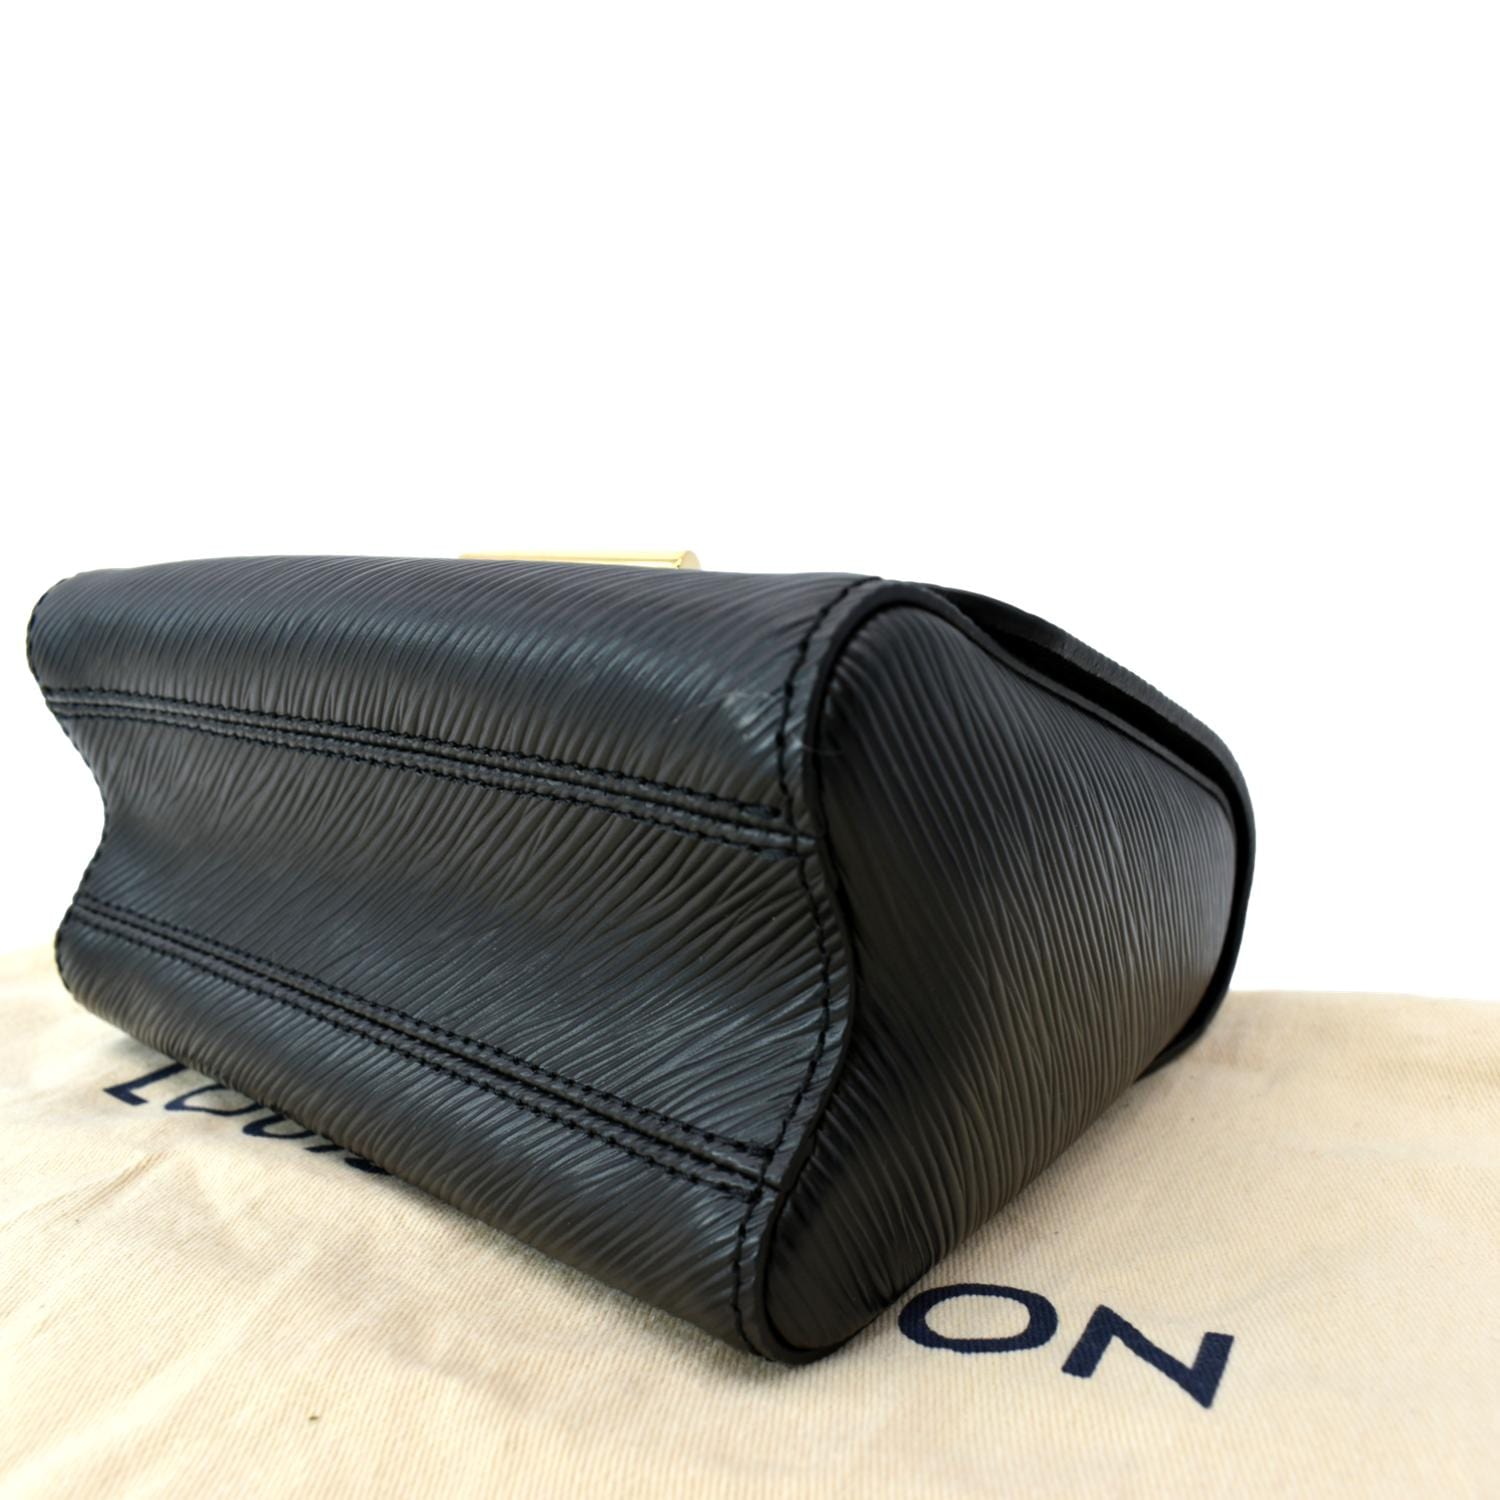 Twist PM Epi Leather - Women - Handbags